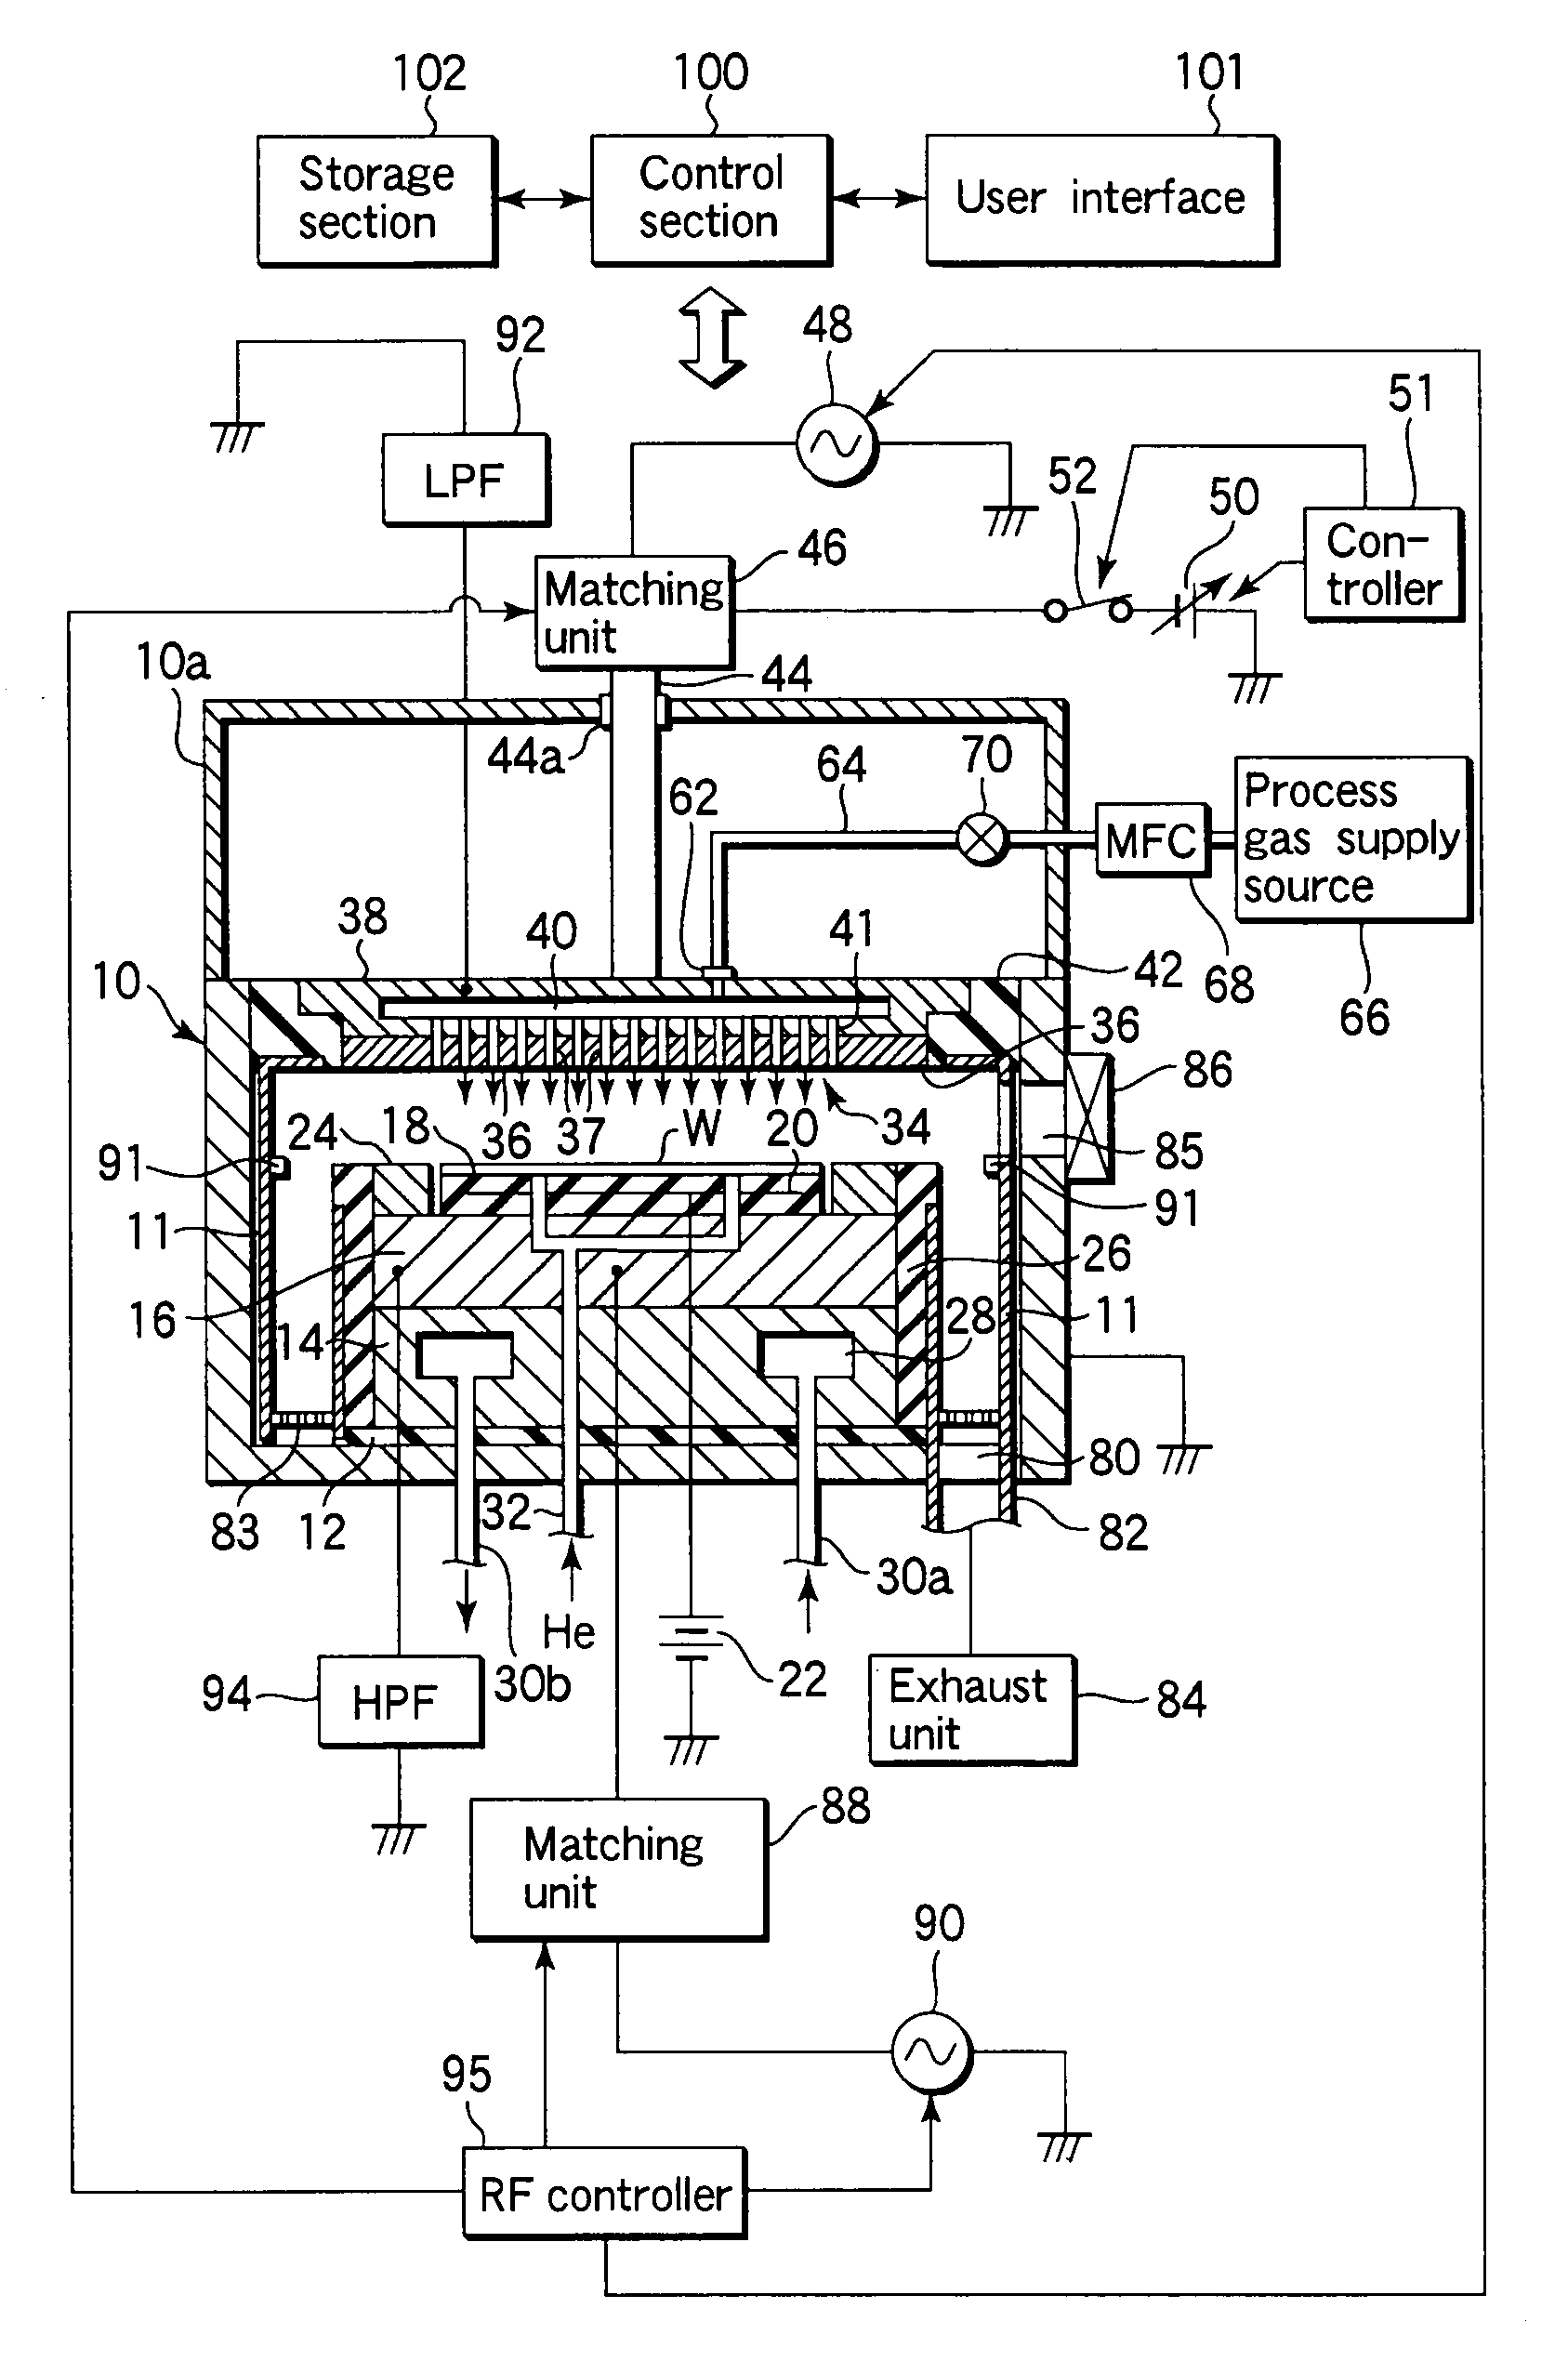 Plasma etching apparatus and method